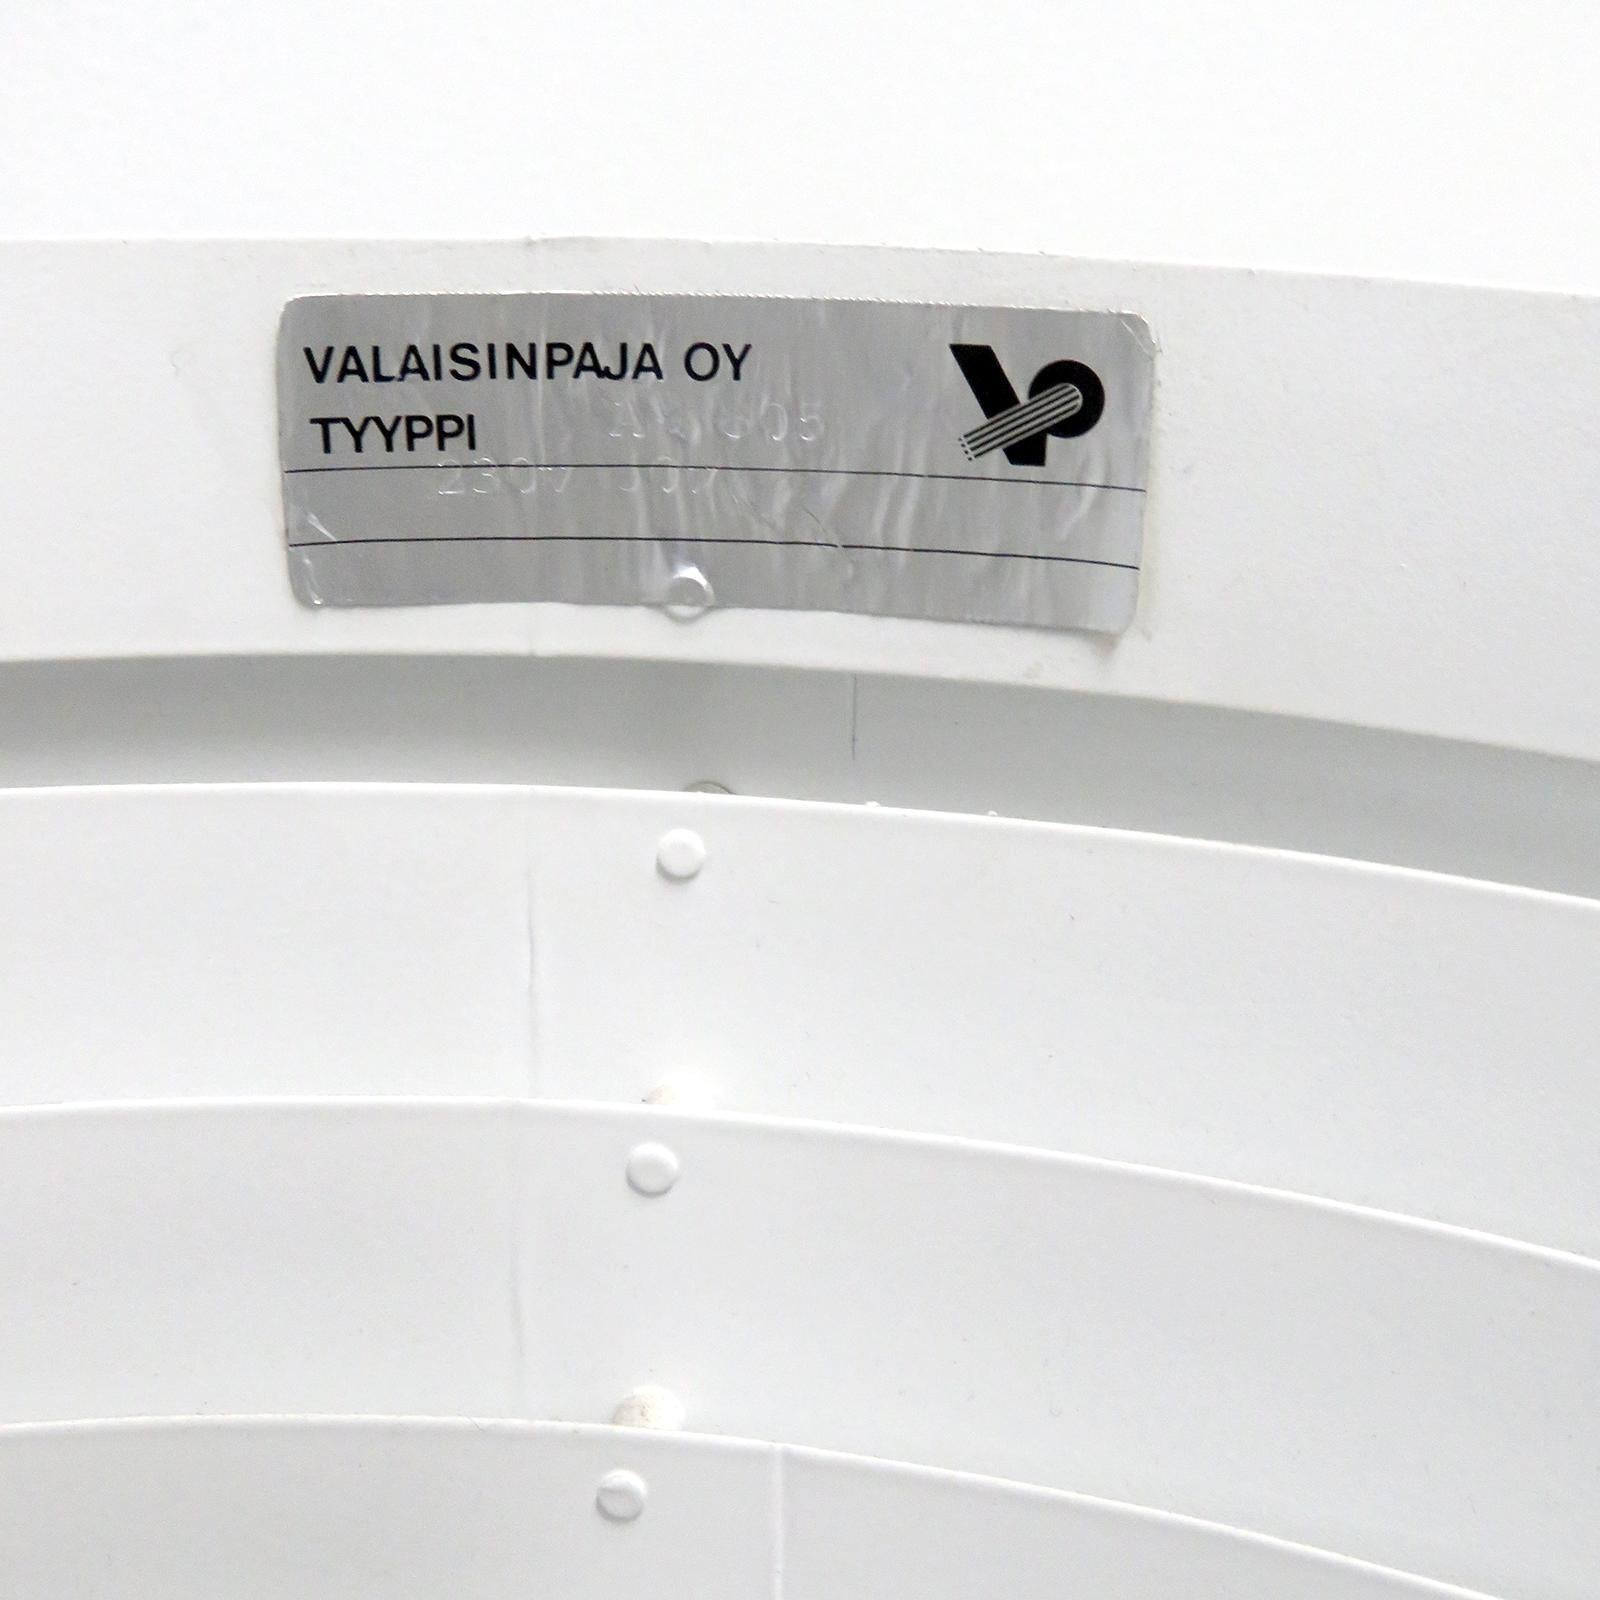 Metal Alvar Aalto Model A805 'Angel Wing' Floor Lamp